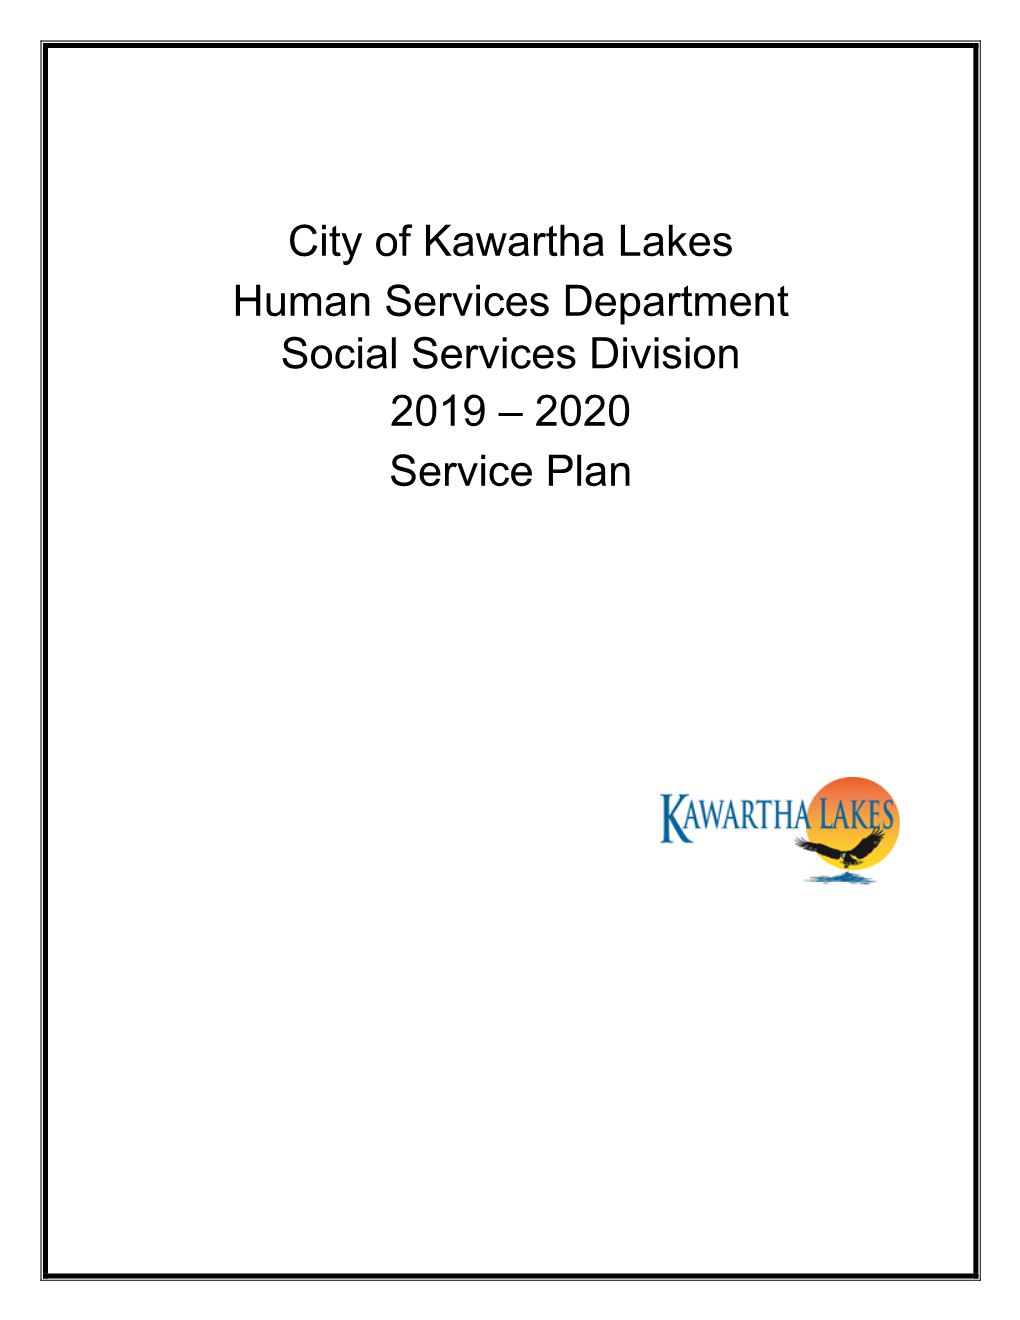 City of Kawartha Lakes Human Services Department Social Services Division 2019 – 2020 Service Plan